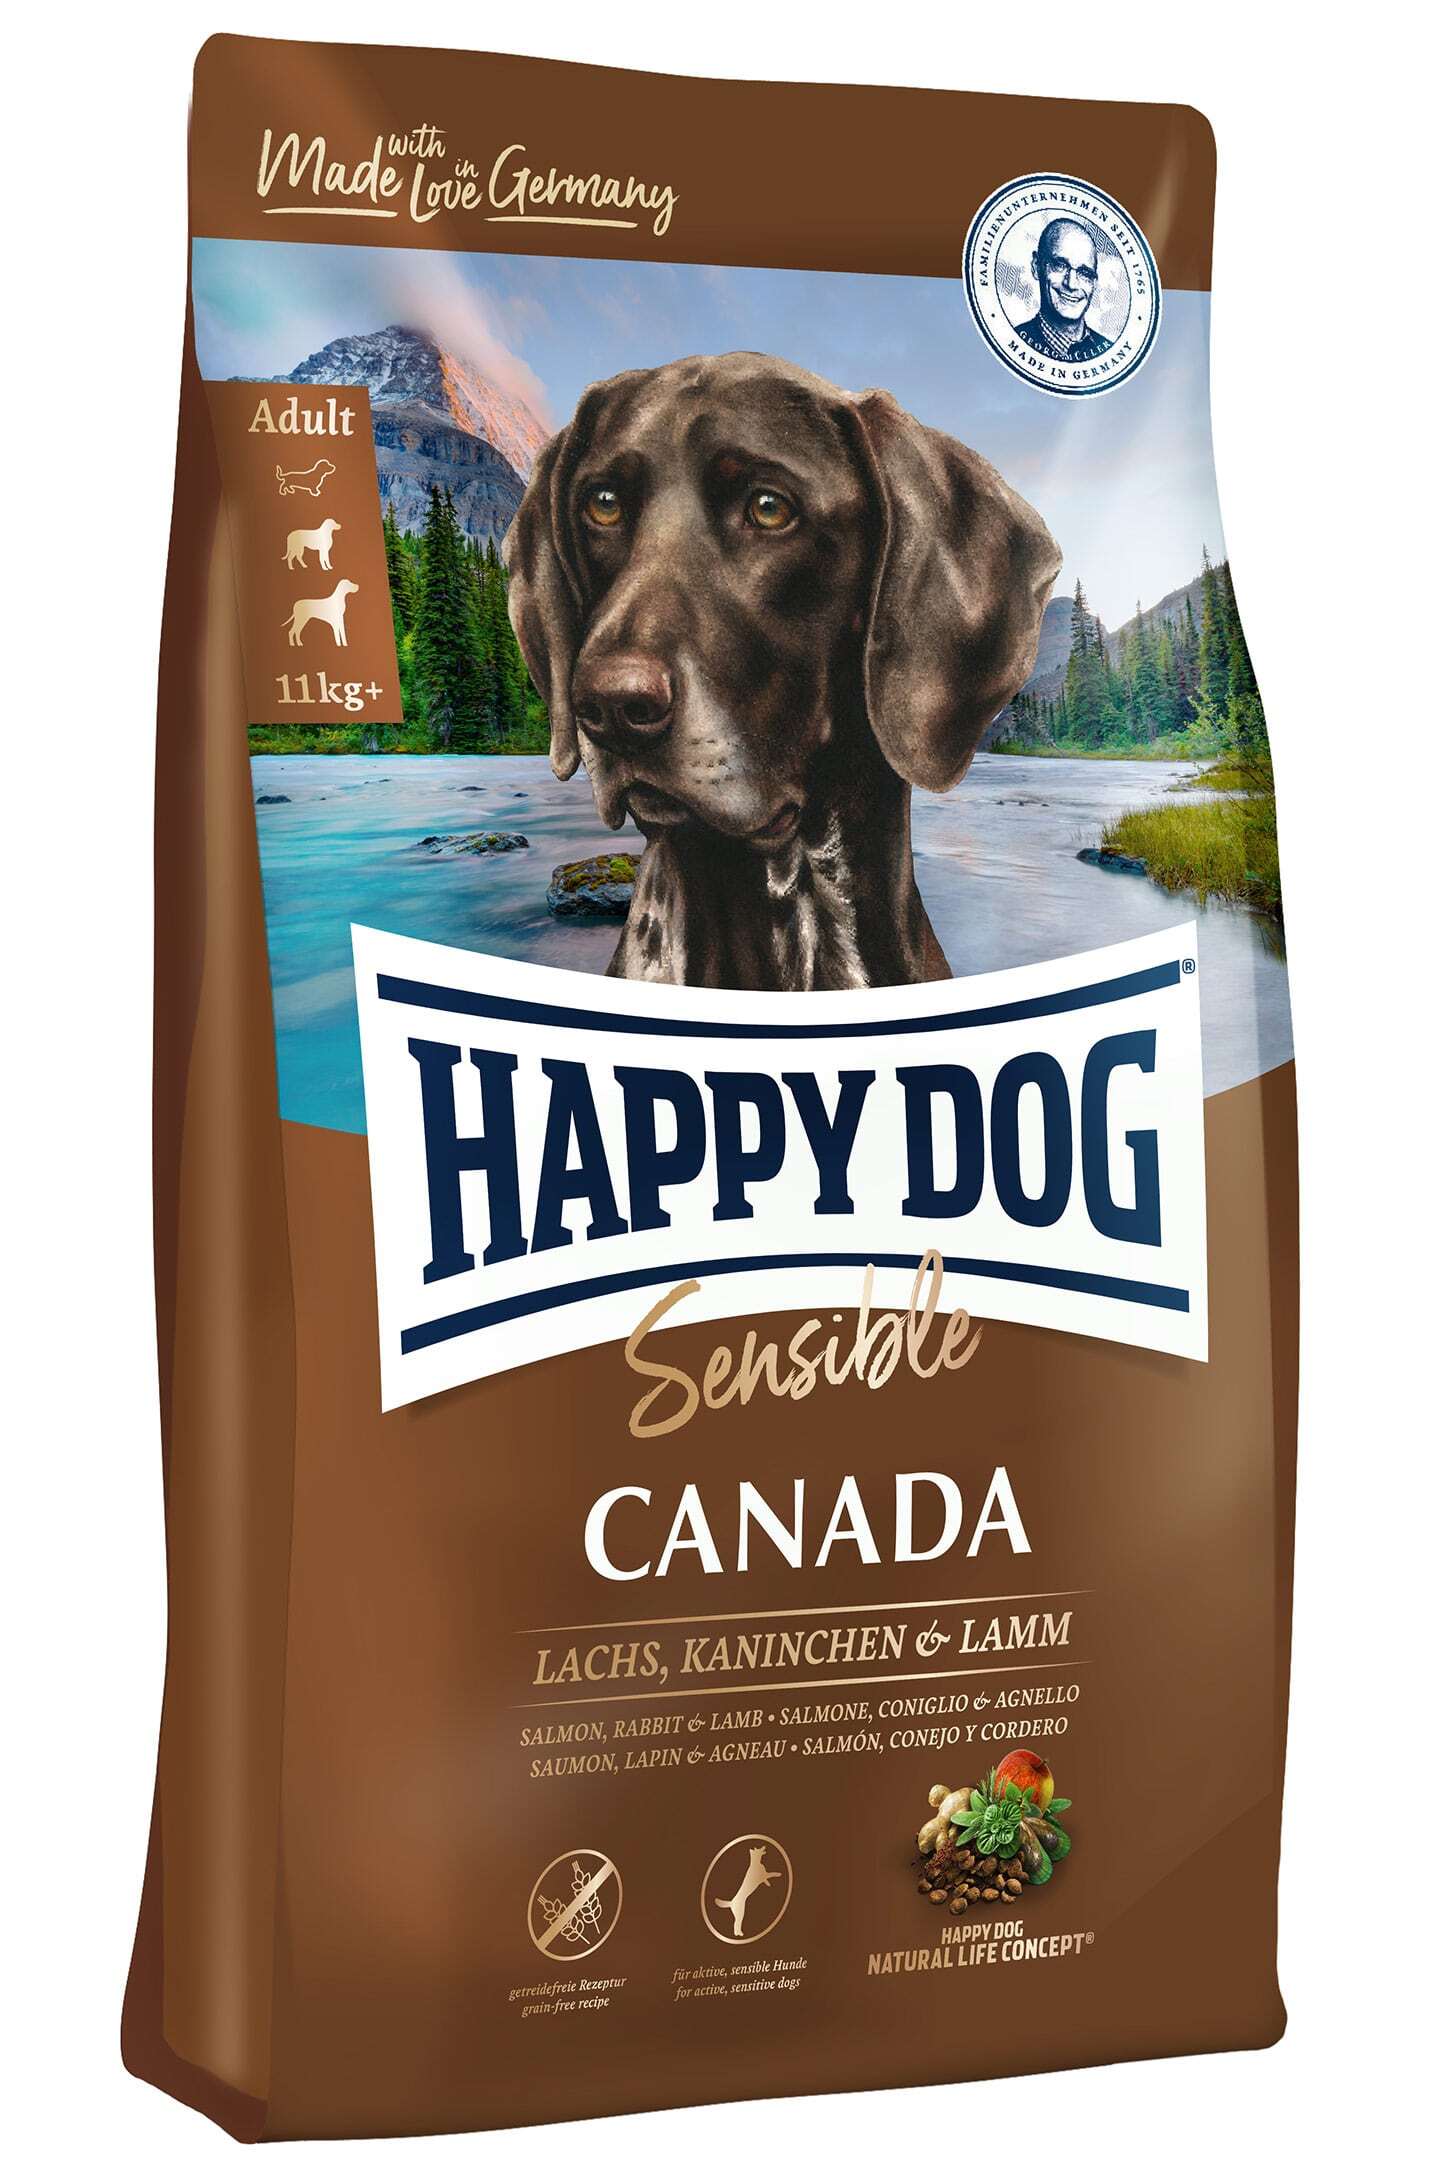 Happy Dog Supreme Sensible - Canada